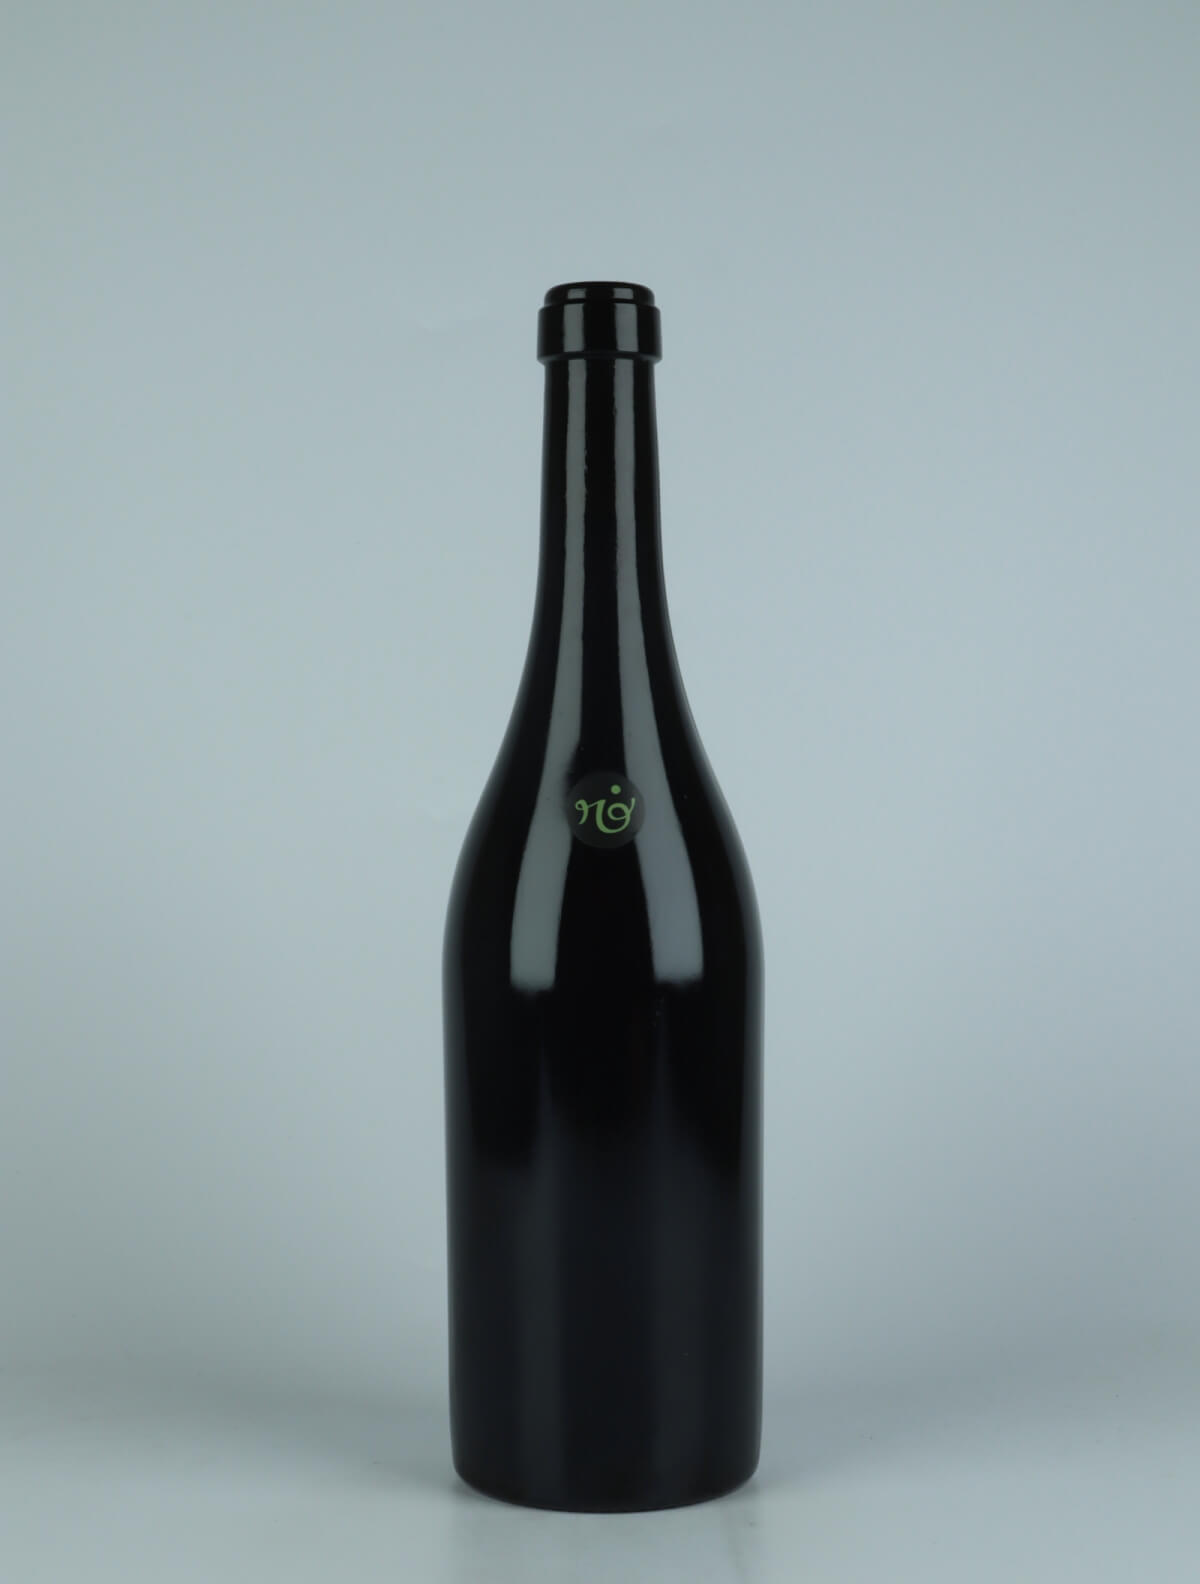 A bottle 2021 Vi Rosat Rosé from Els Jelipins, Penedès in Spain